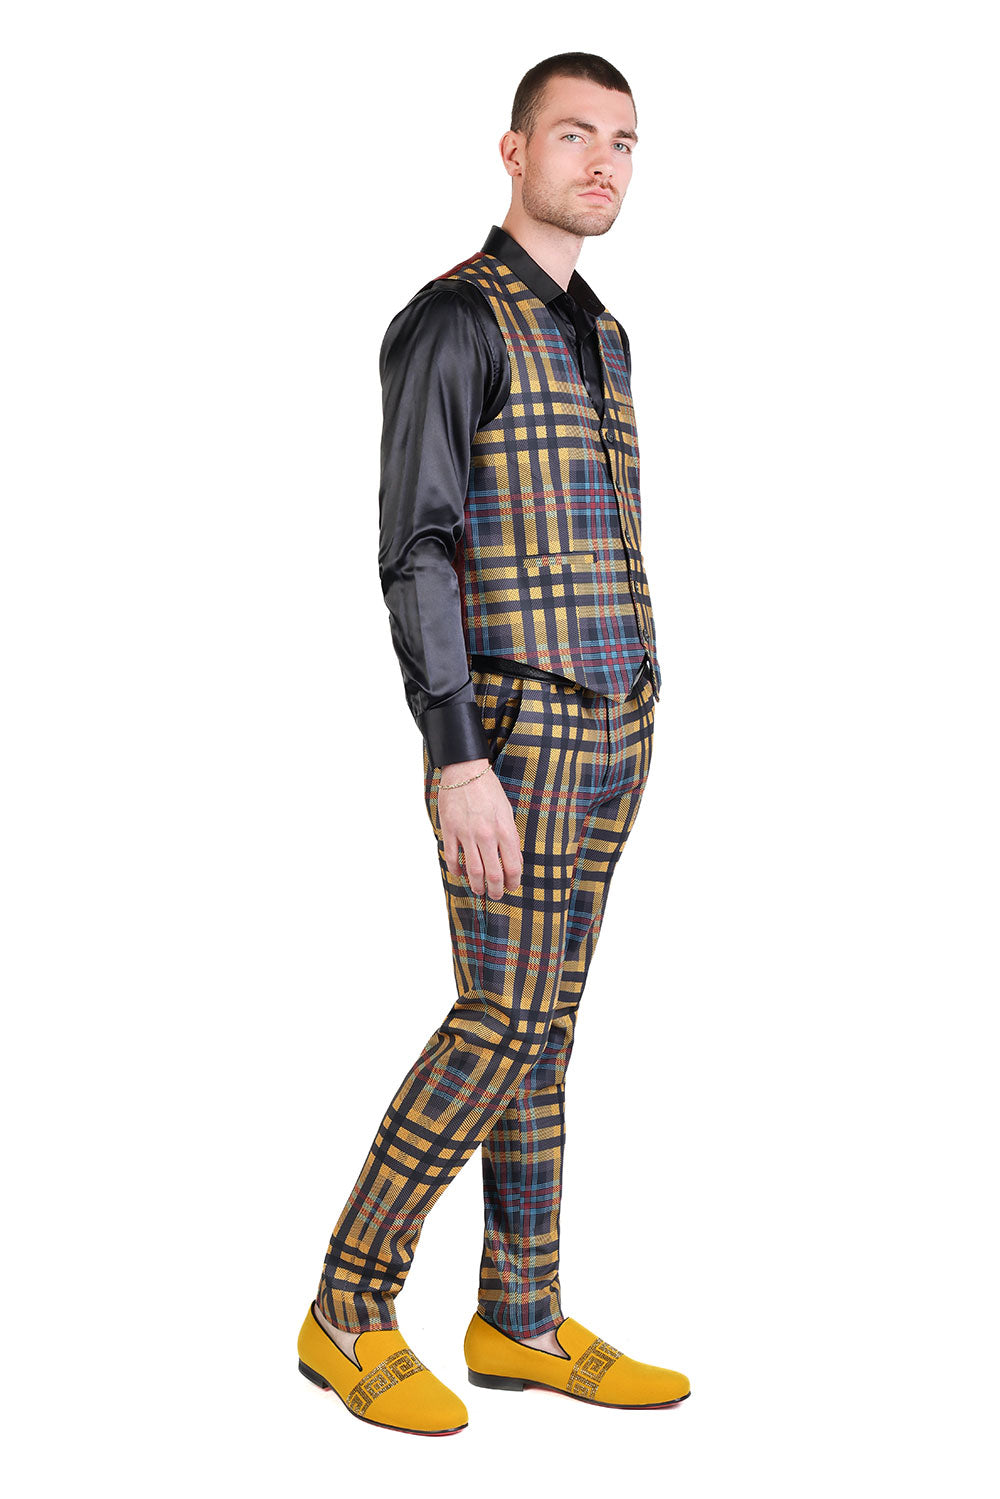 Barabas Men's Luxury Plaid Checkered Dress Slim Fit  Vests VP201  Yellow